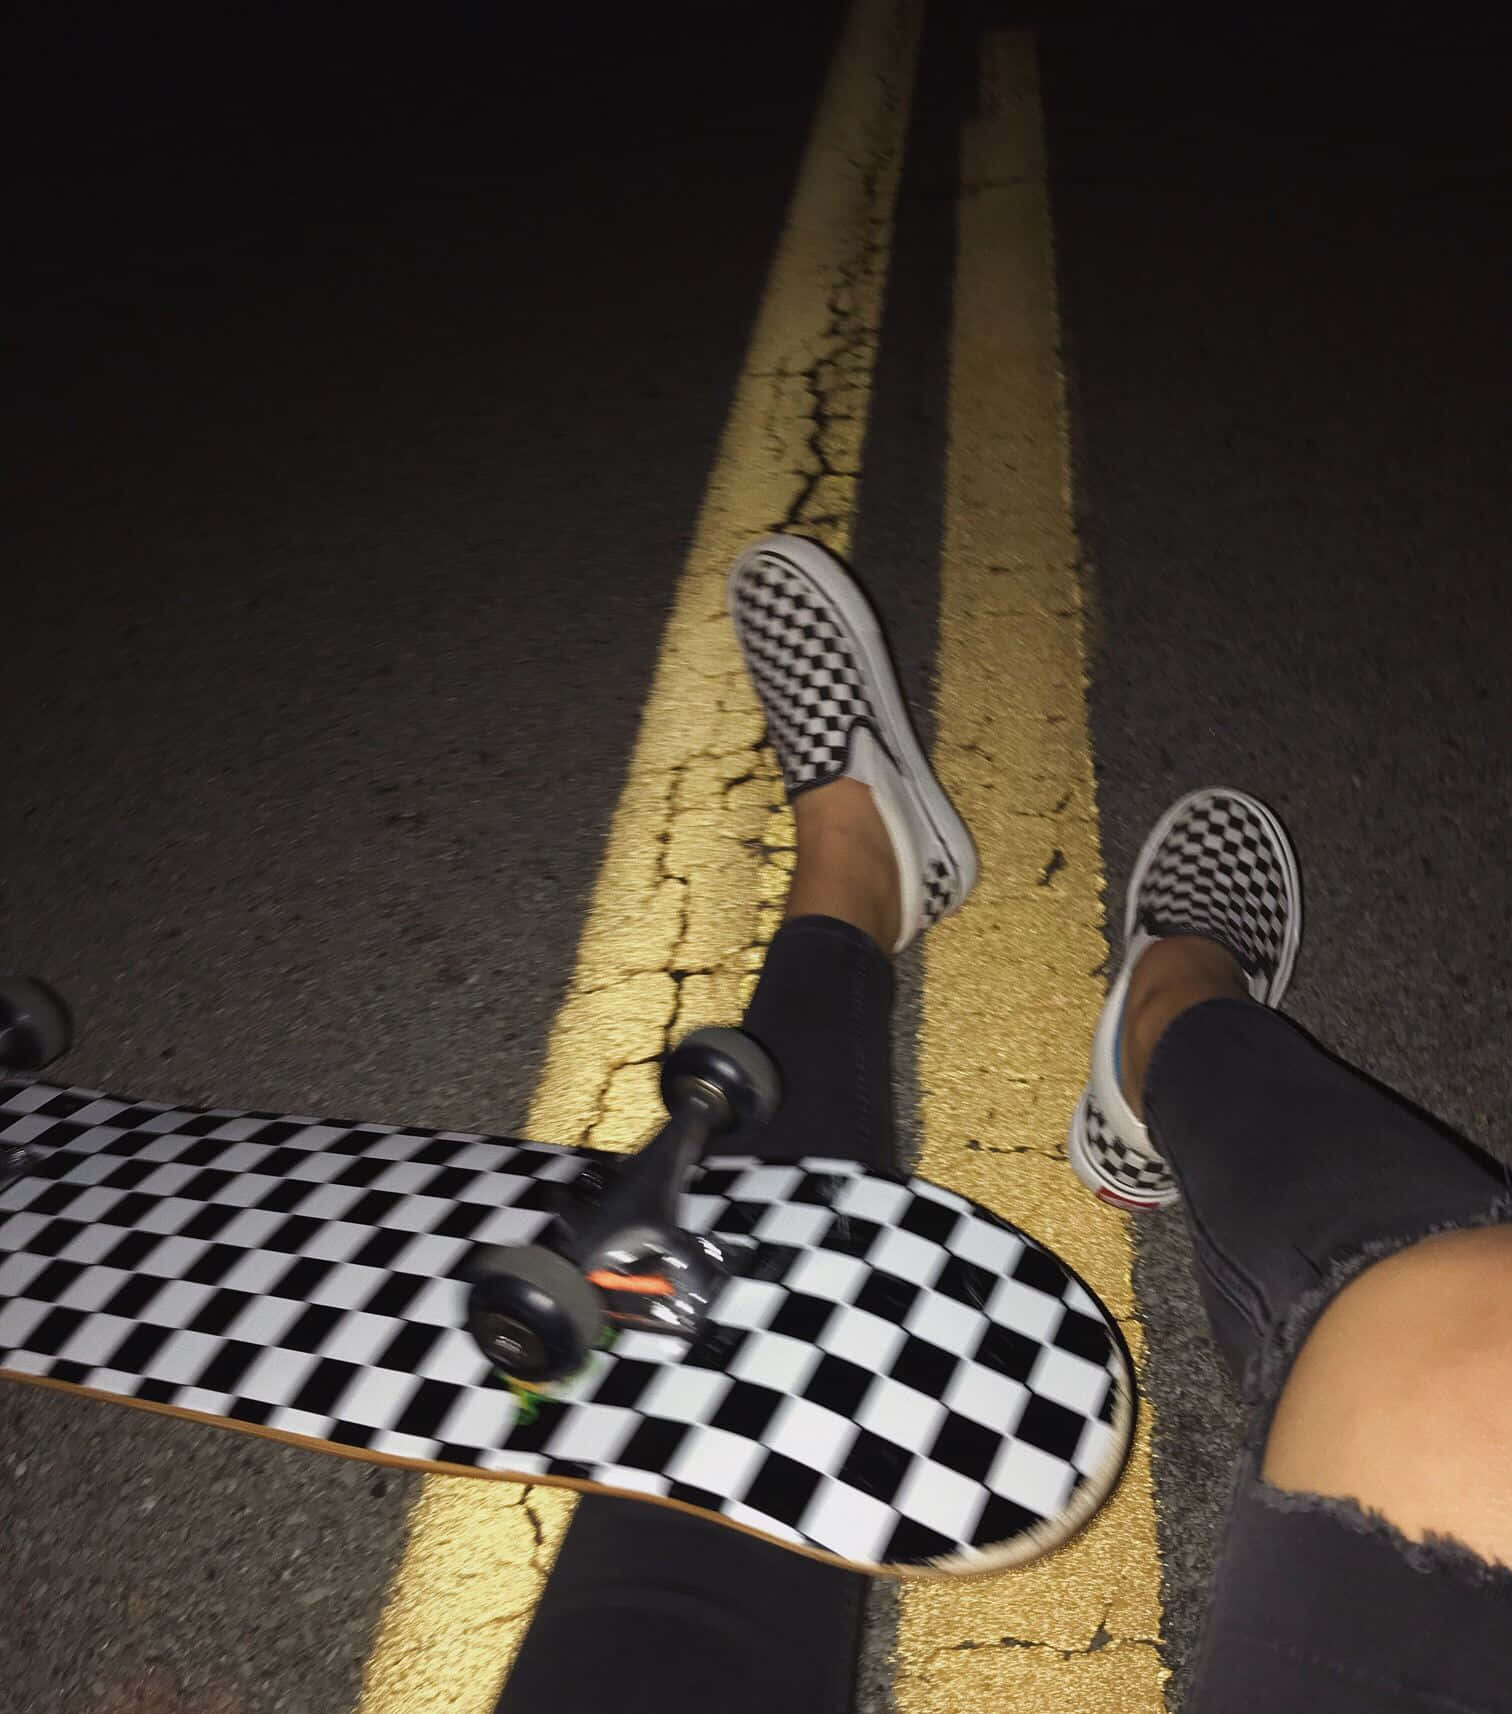 Nighttime Skateboarder Checkered Shoesand Board Wallpaper